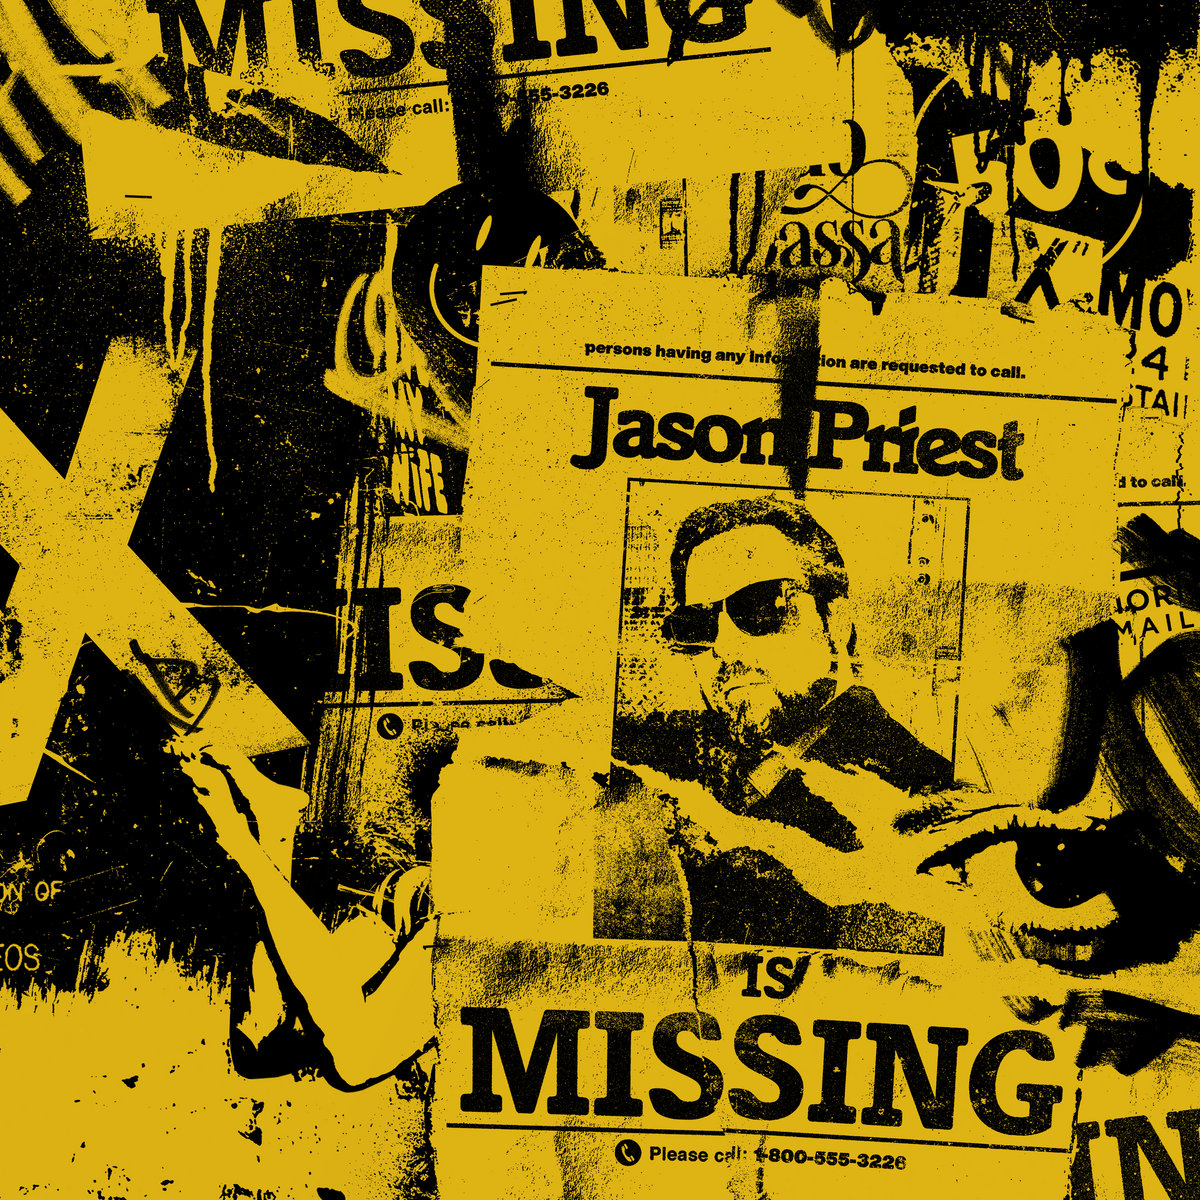 Jason Priest, “Jason Priest is Missing”